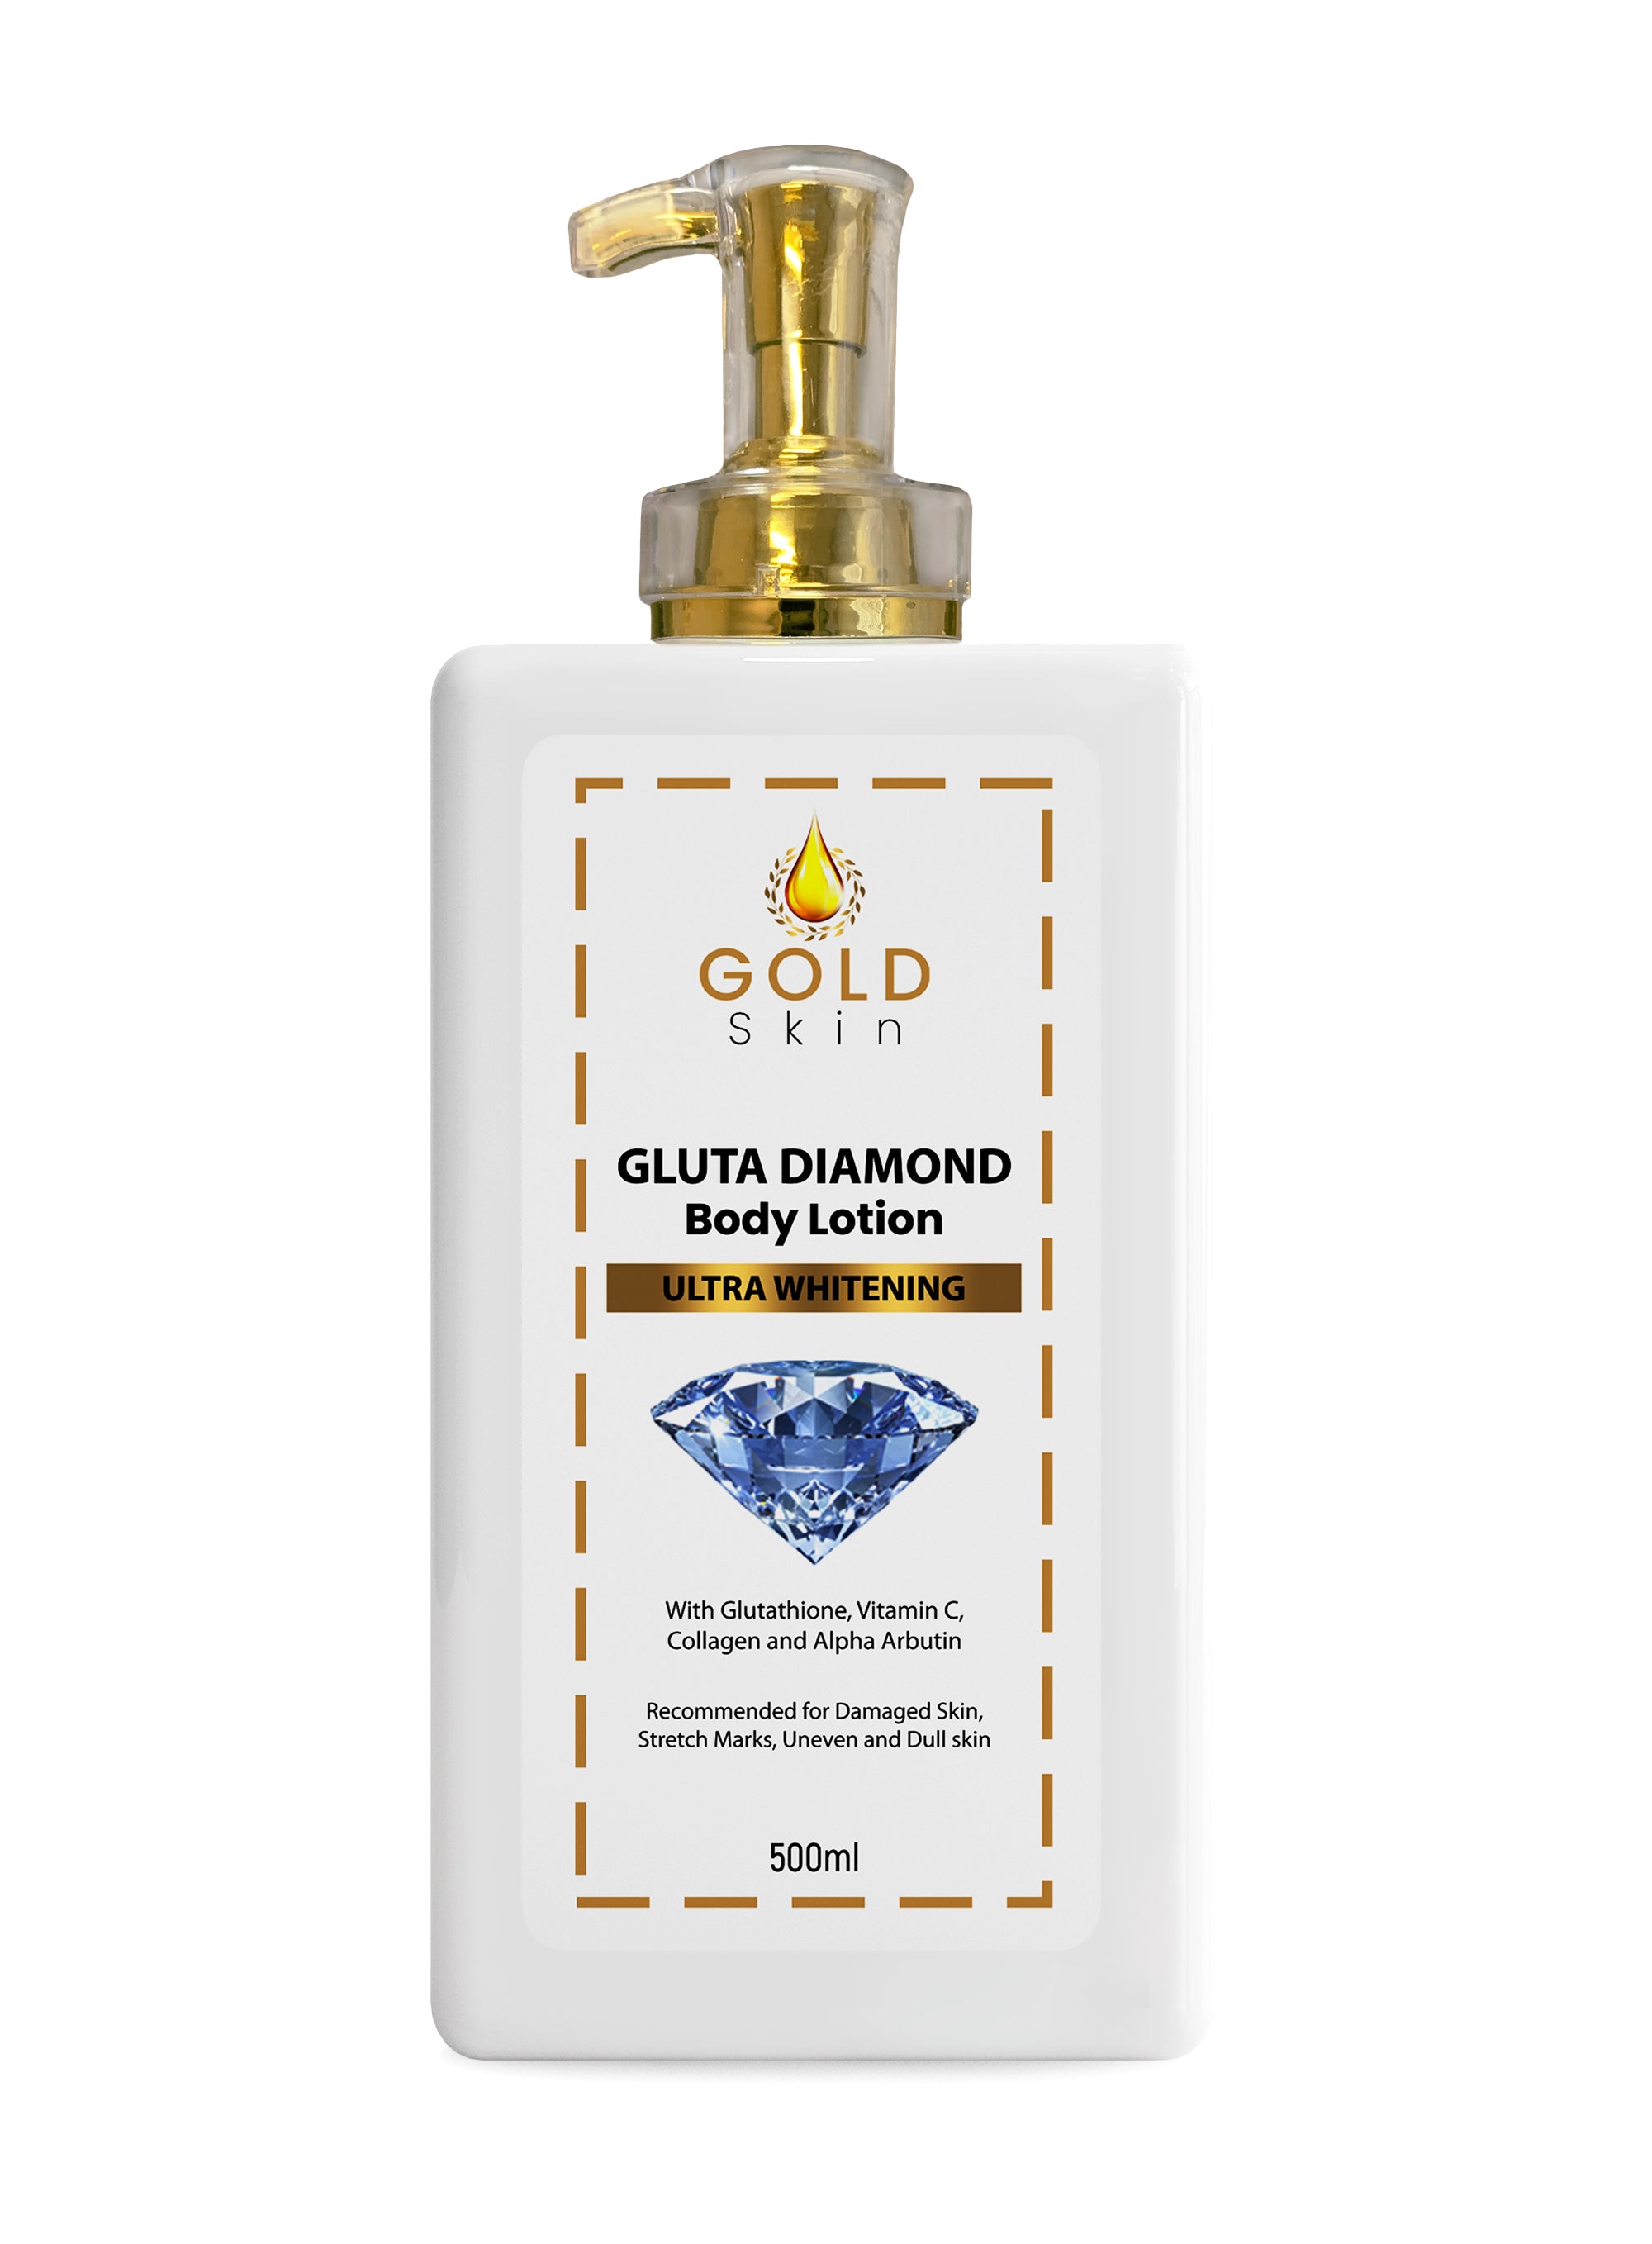 Gluta Diamond Body Lotion